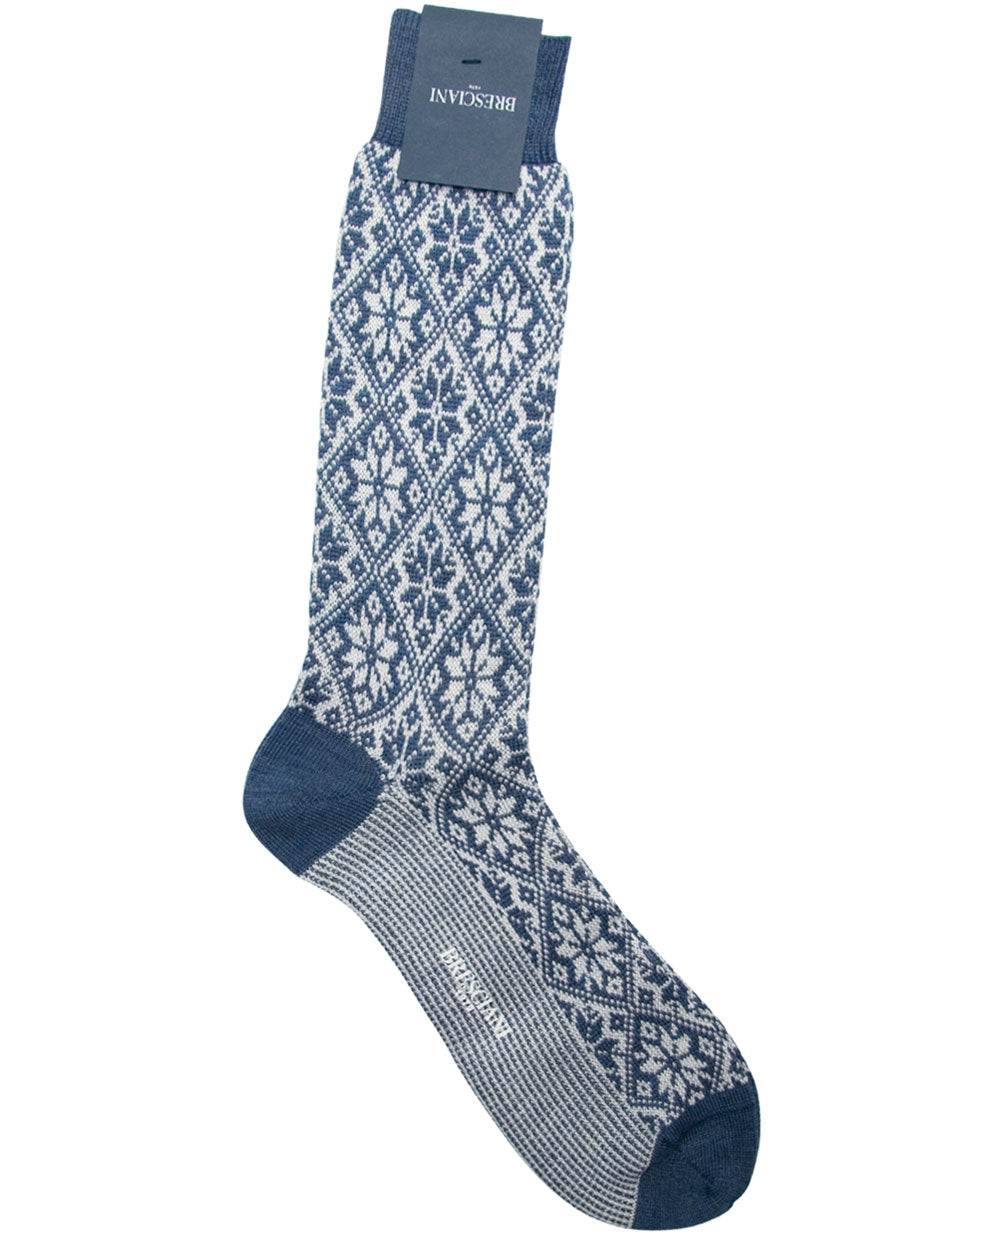 Blue and Cream Snowflake Midcalf Socks